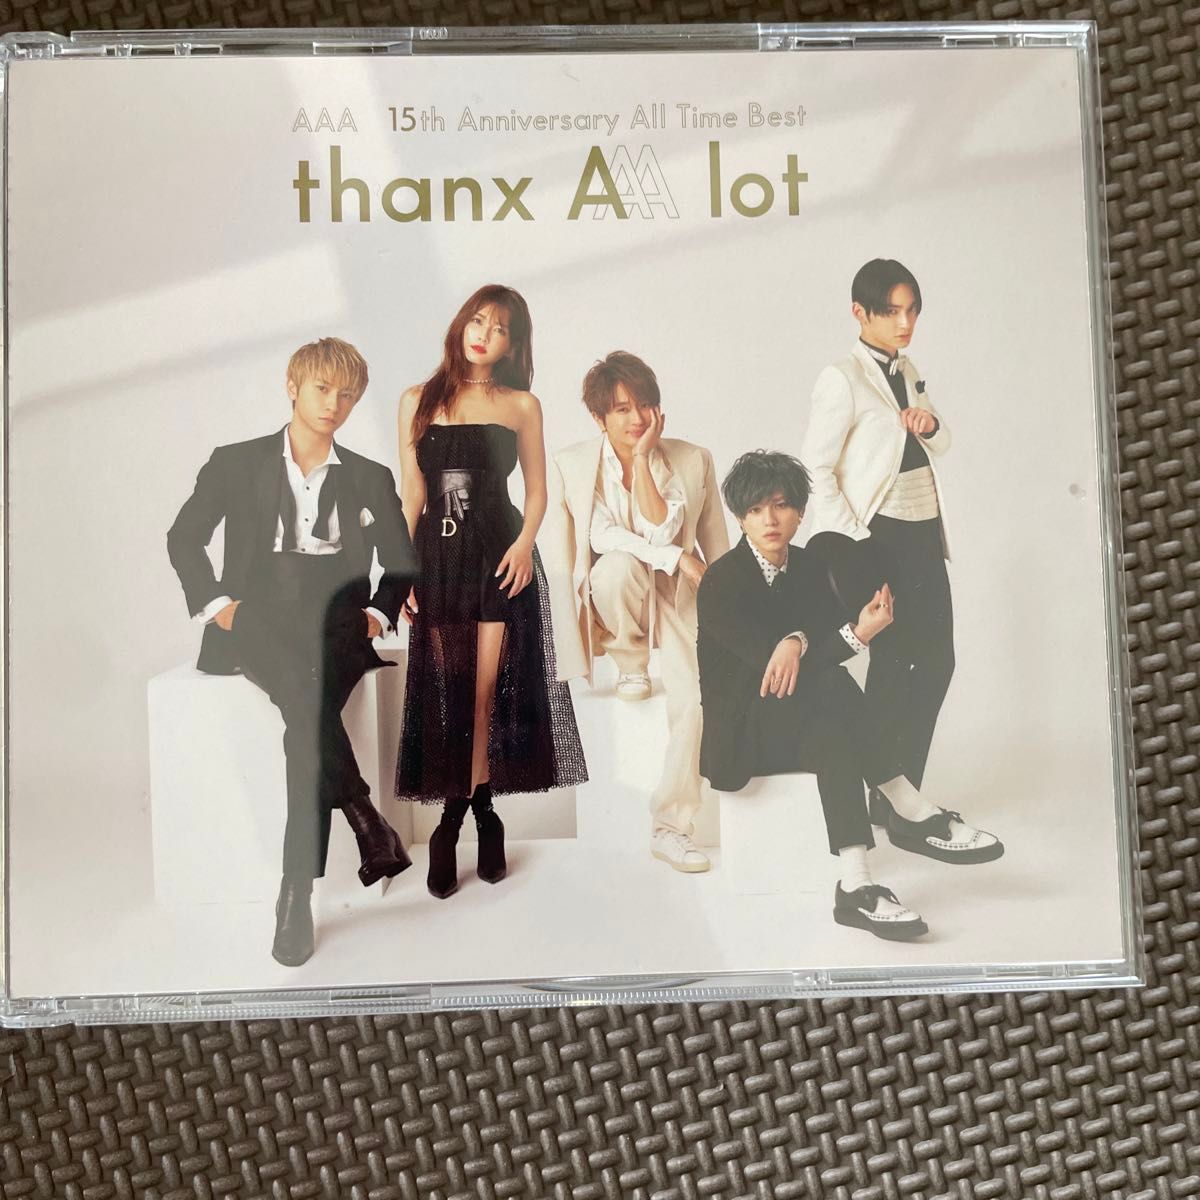 AAA 4CD/AAA 15th Anniversary All Time Best -thanx AAA lot- 